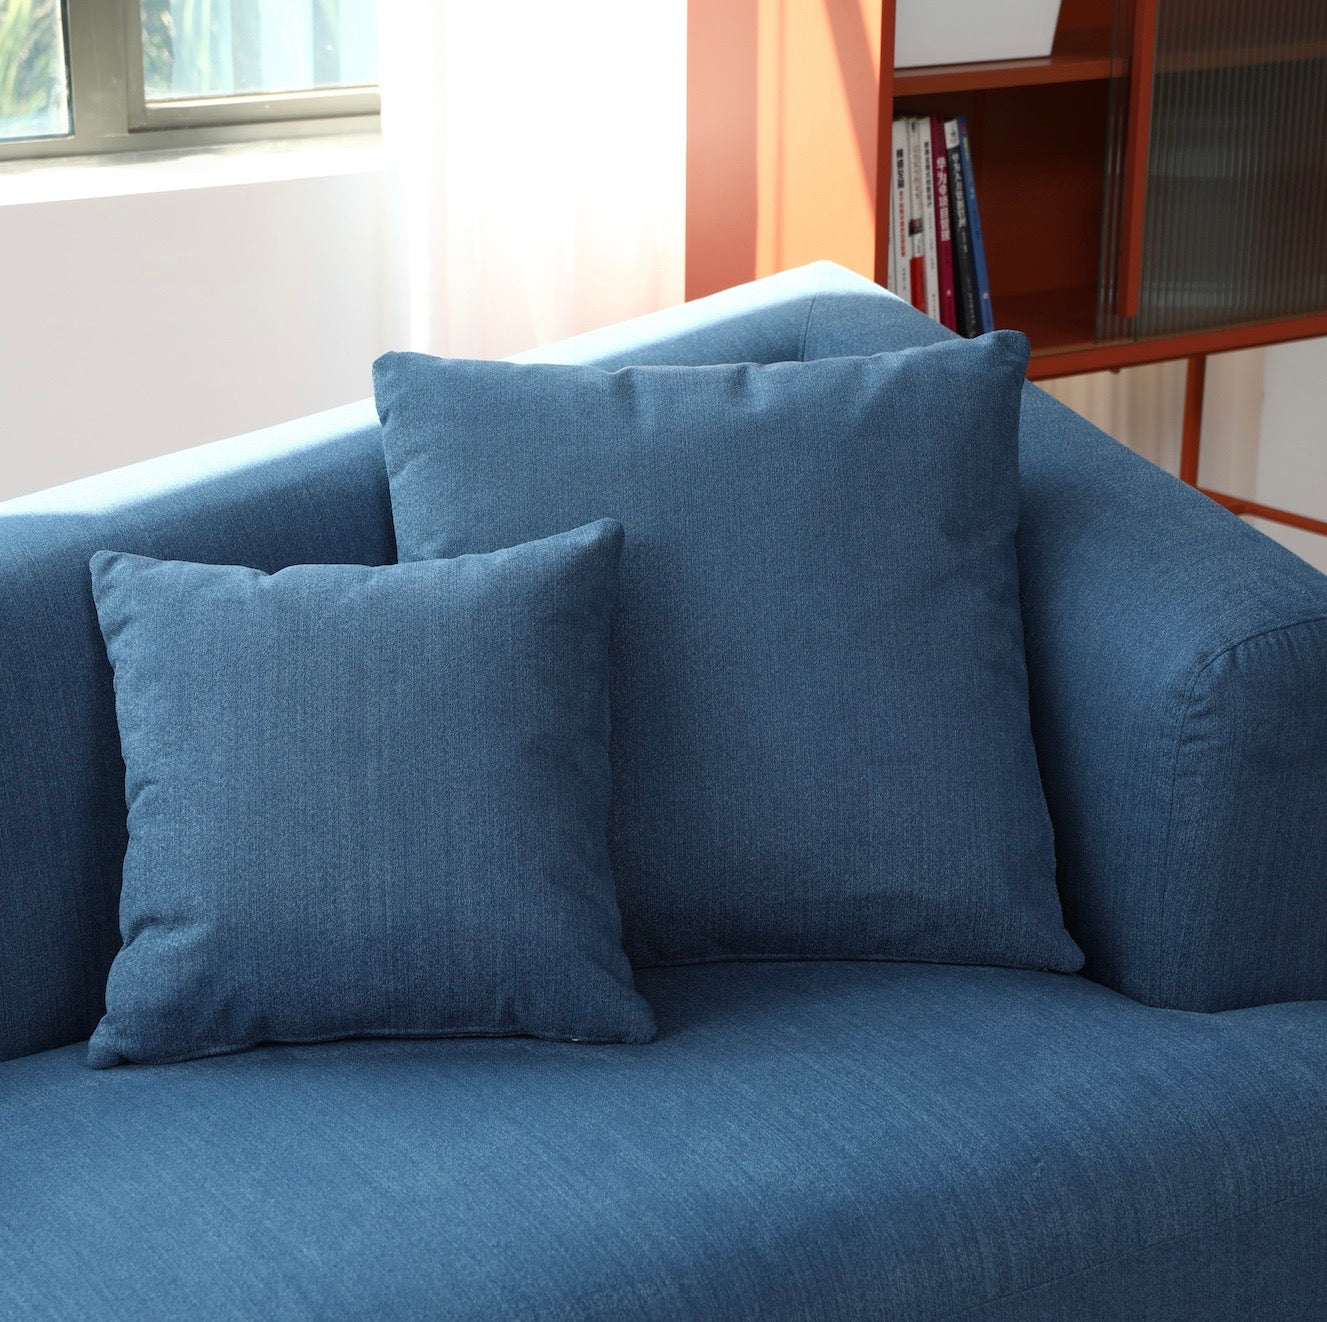 Miami sofa 3 Seater - Blue